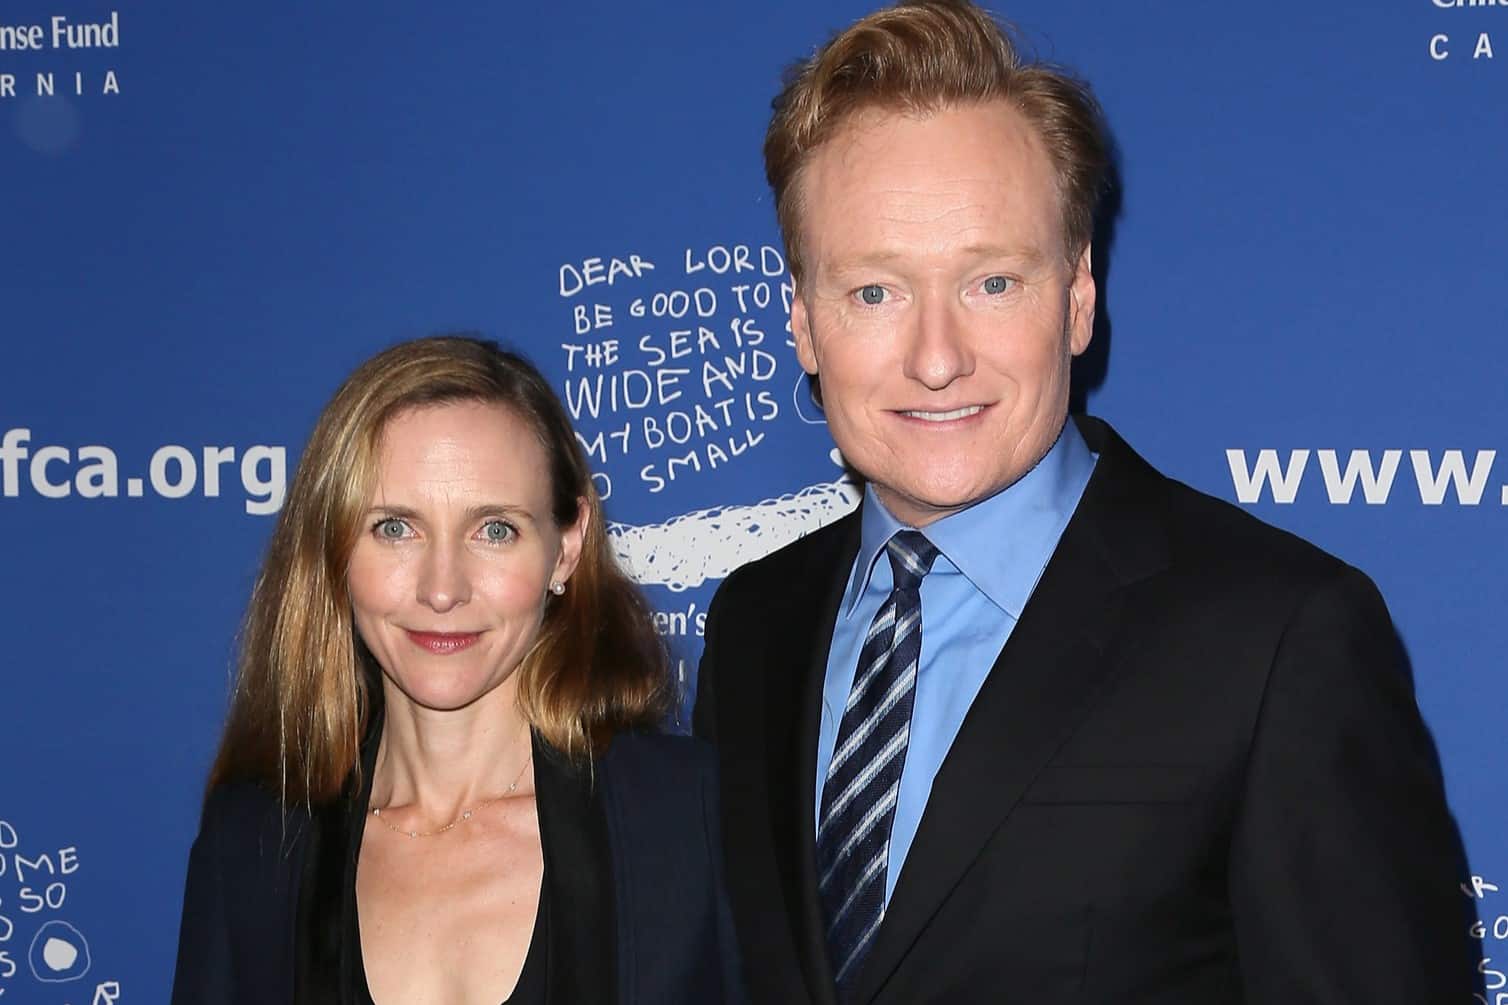 Conan O'Brien and his wife, Liza